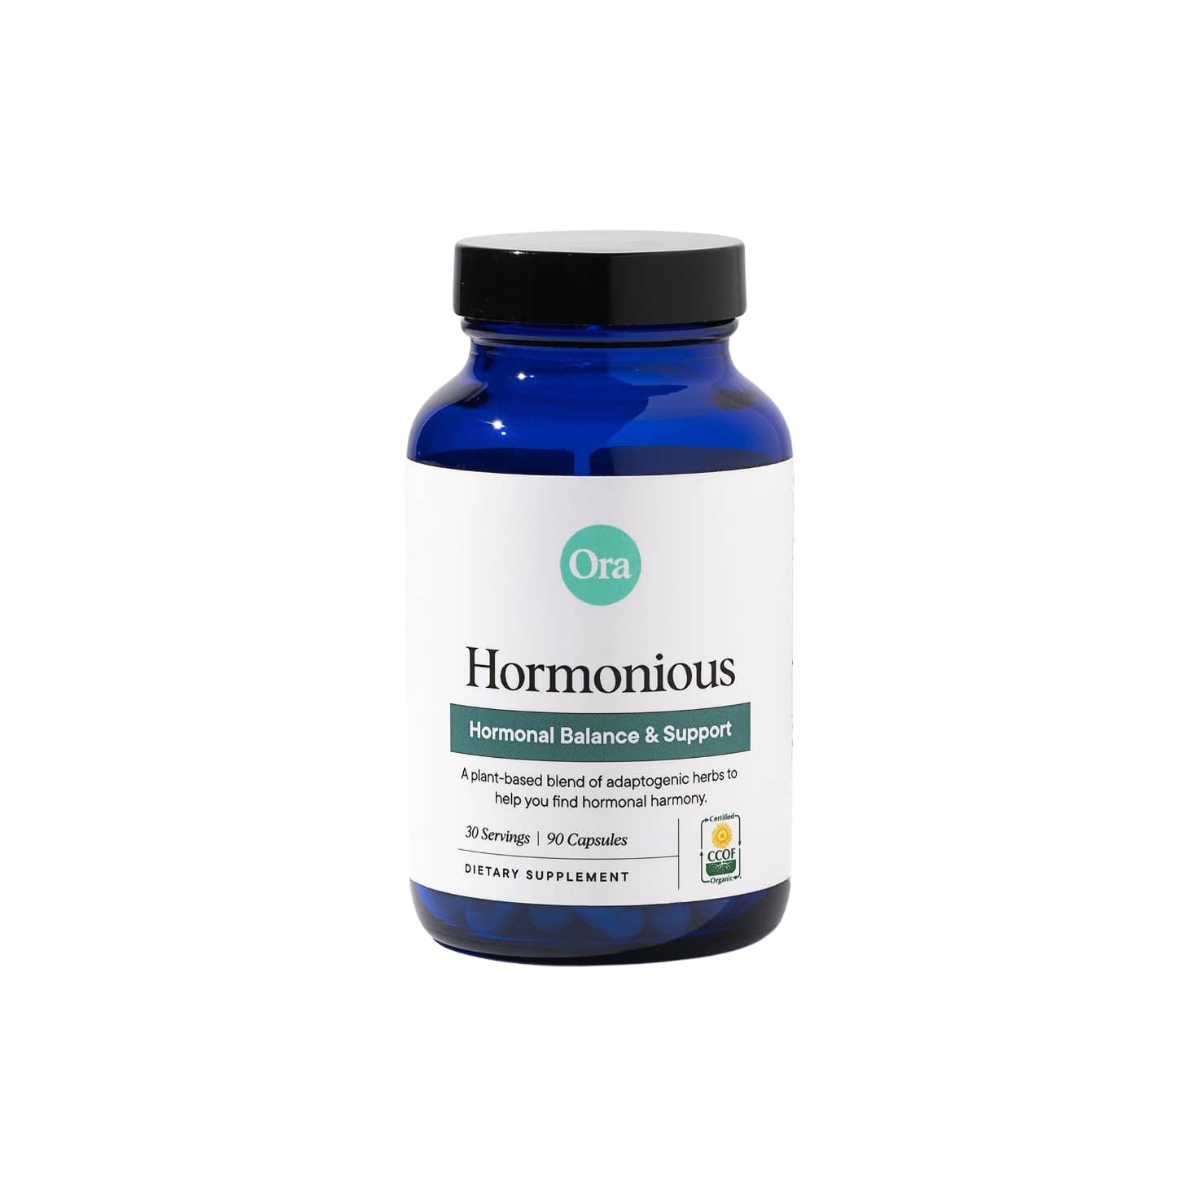 Ora Hormonious - Hormonal Balance & Support